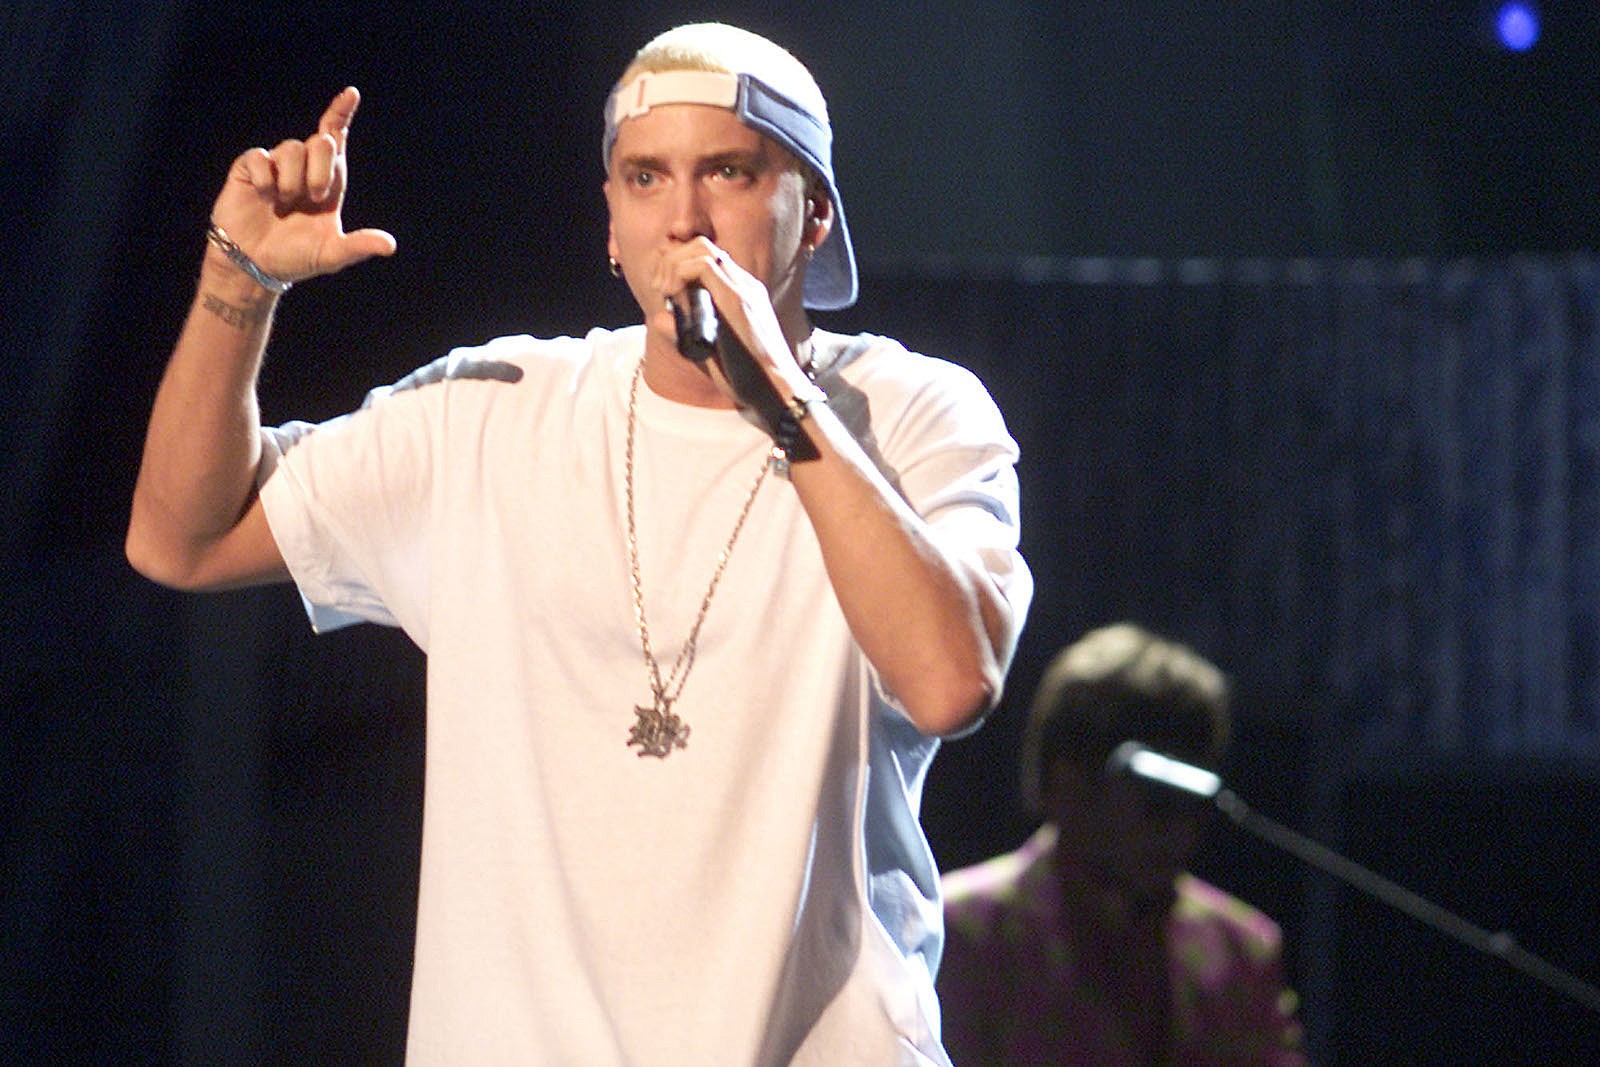 Eminem talks about his Oscar experience